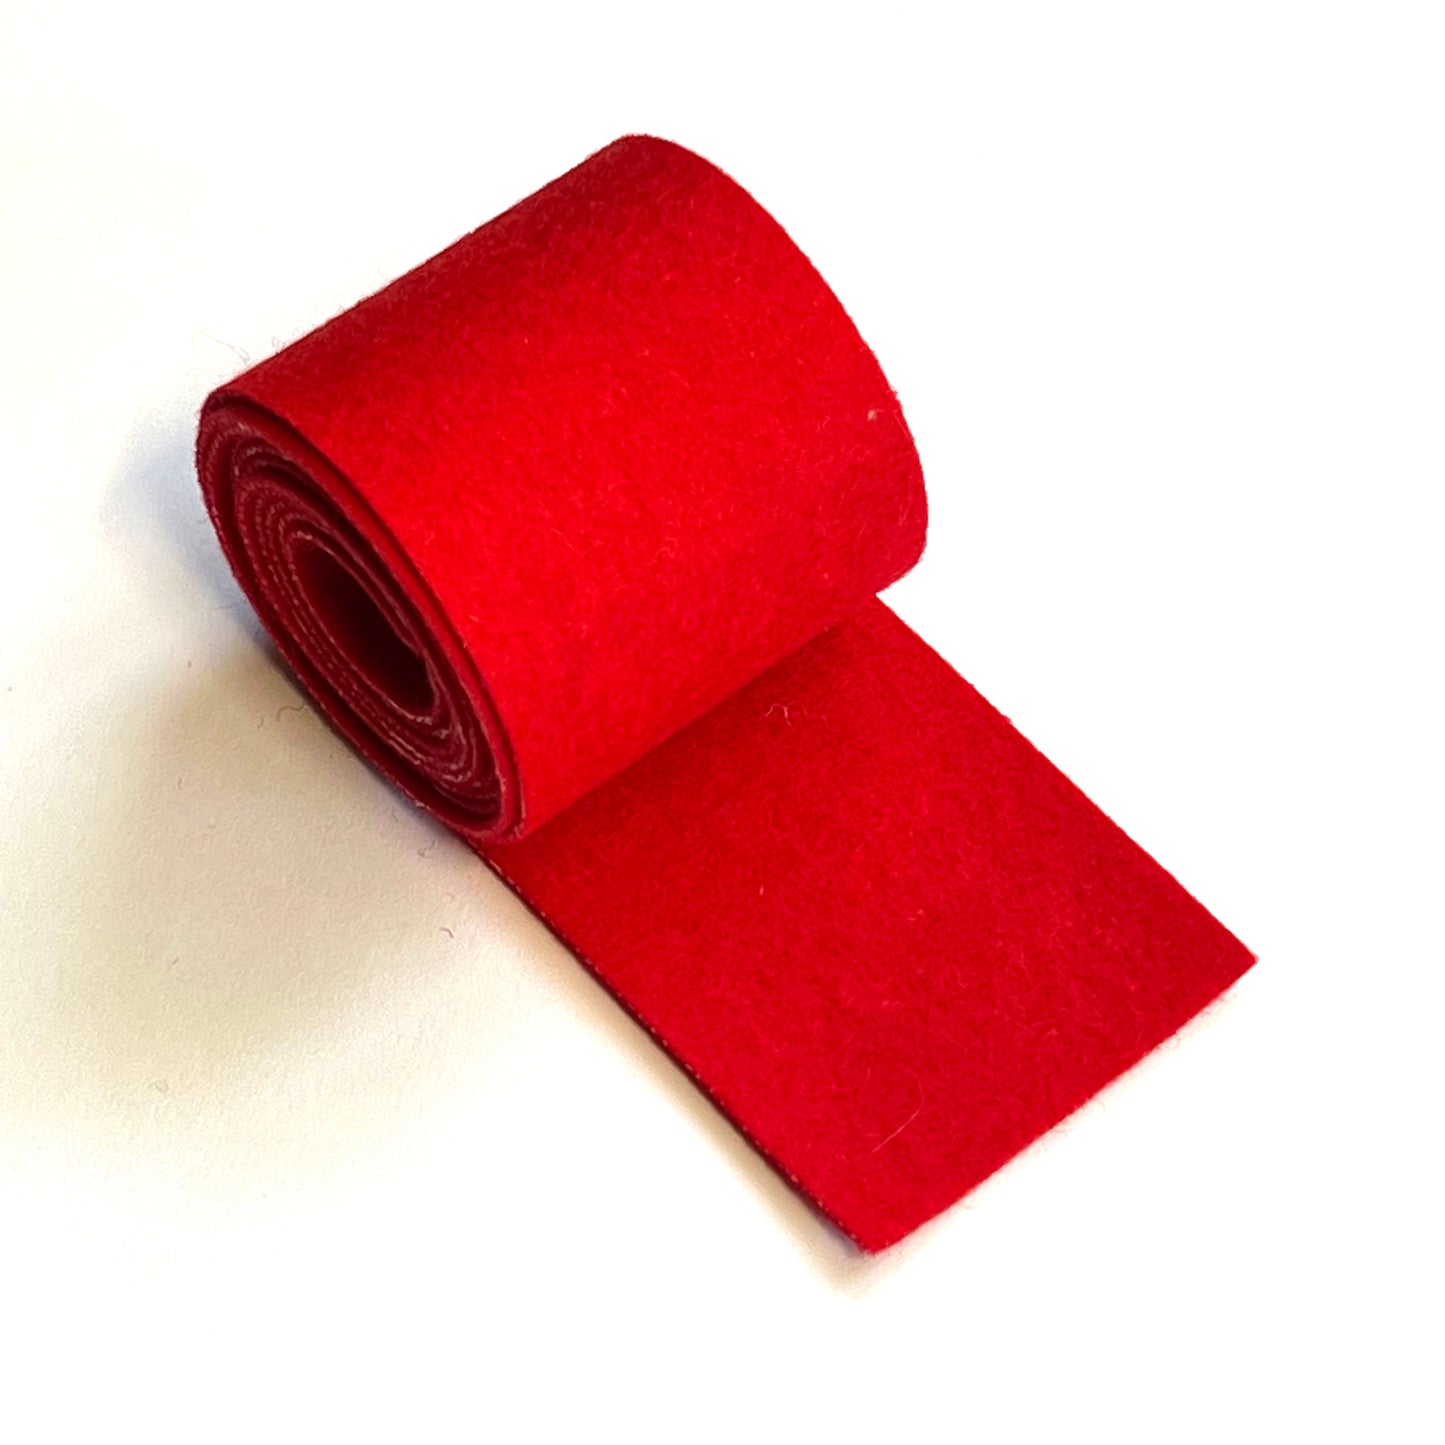 1mm red cloth strip